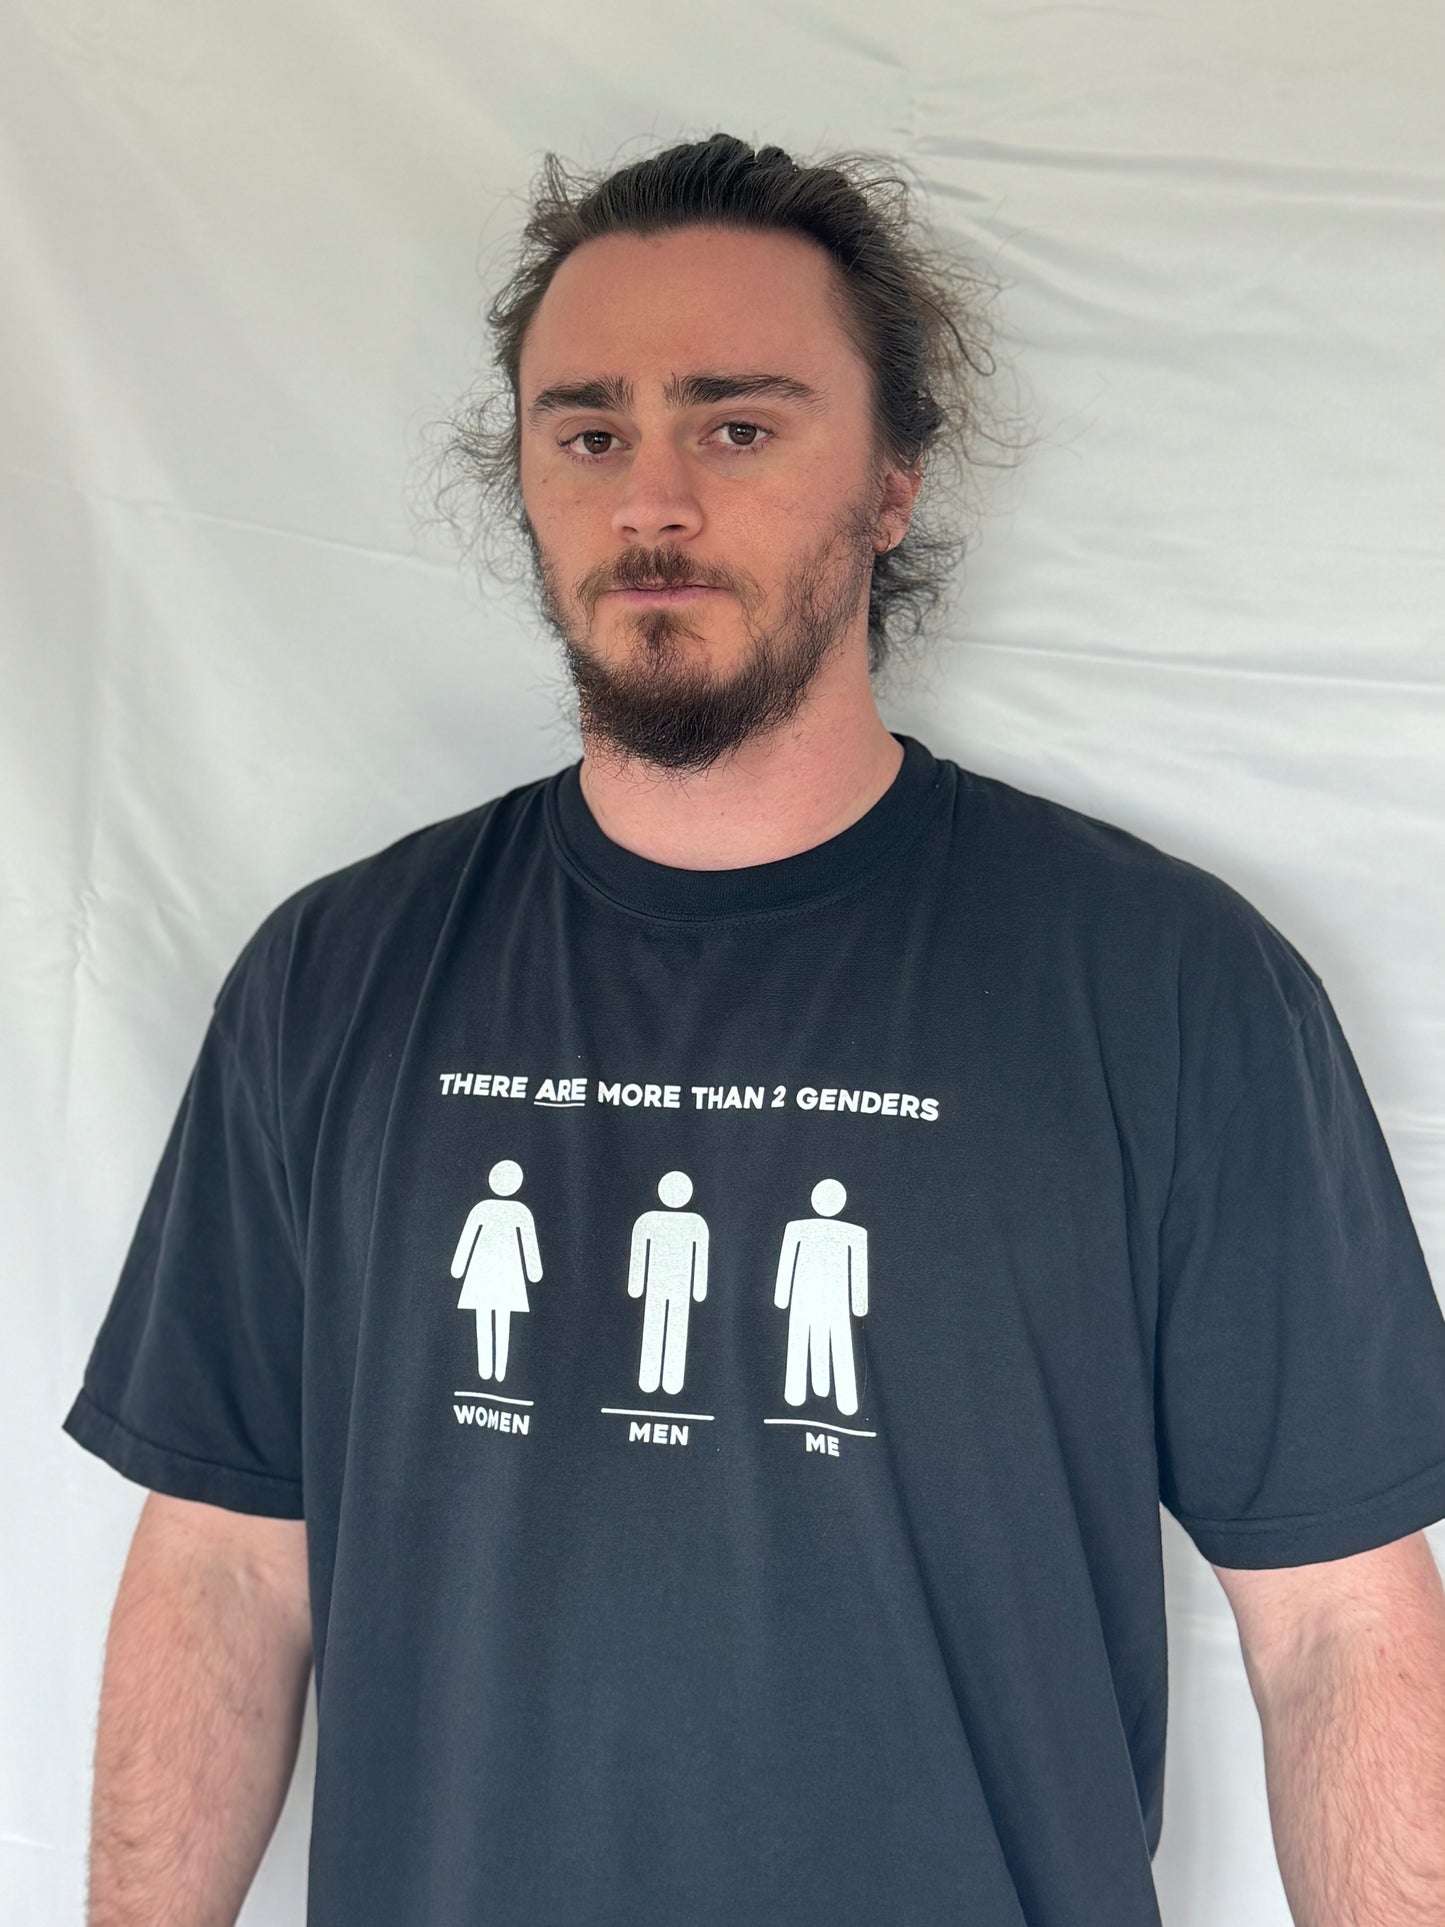 "More Than 2 Genders" Shirt